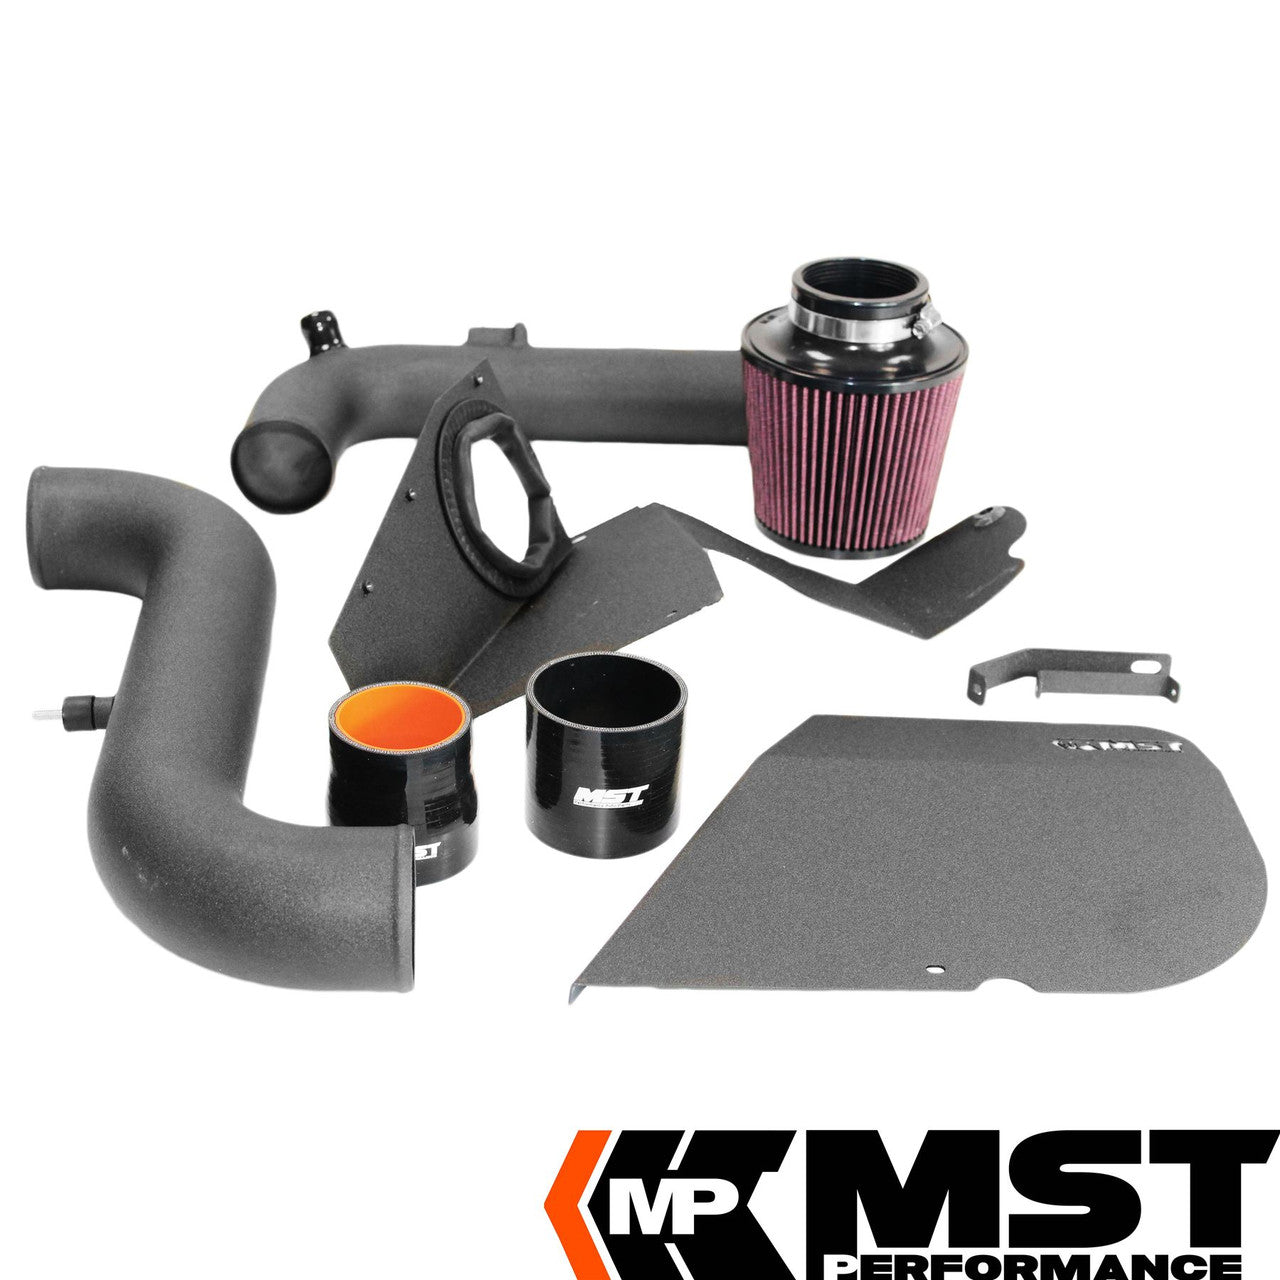 Race haus MST-VW-MK501 - Intake Kit With Full Intake pipework for VW Golf MK5 GTI MK6 R 2.0 TFSI Ea113